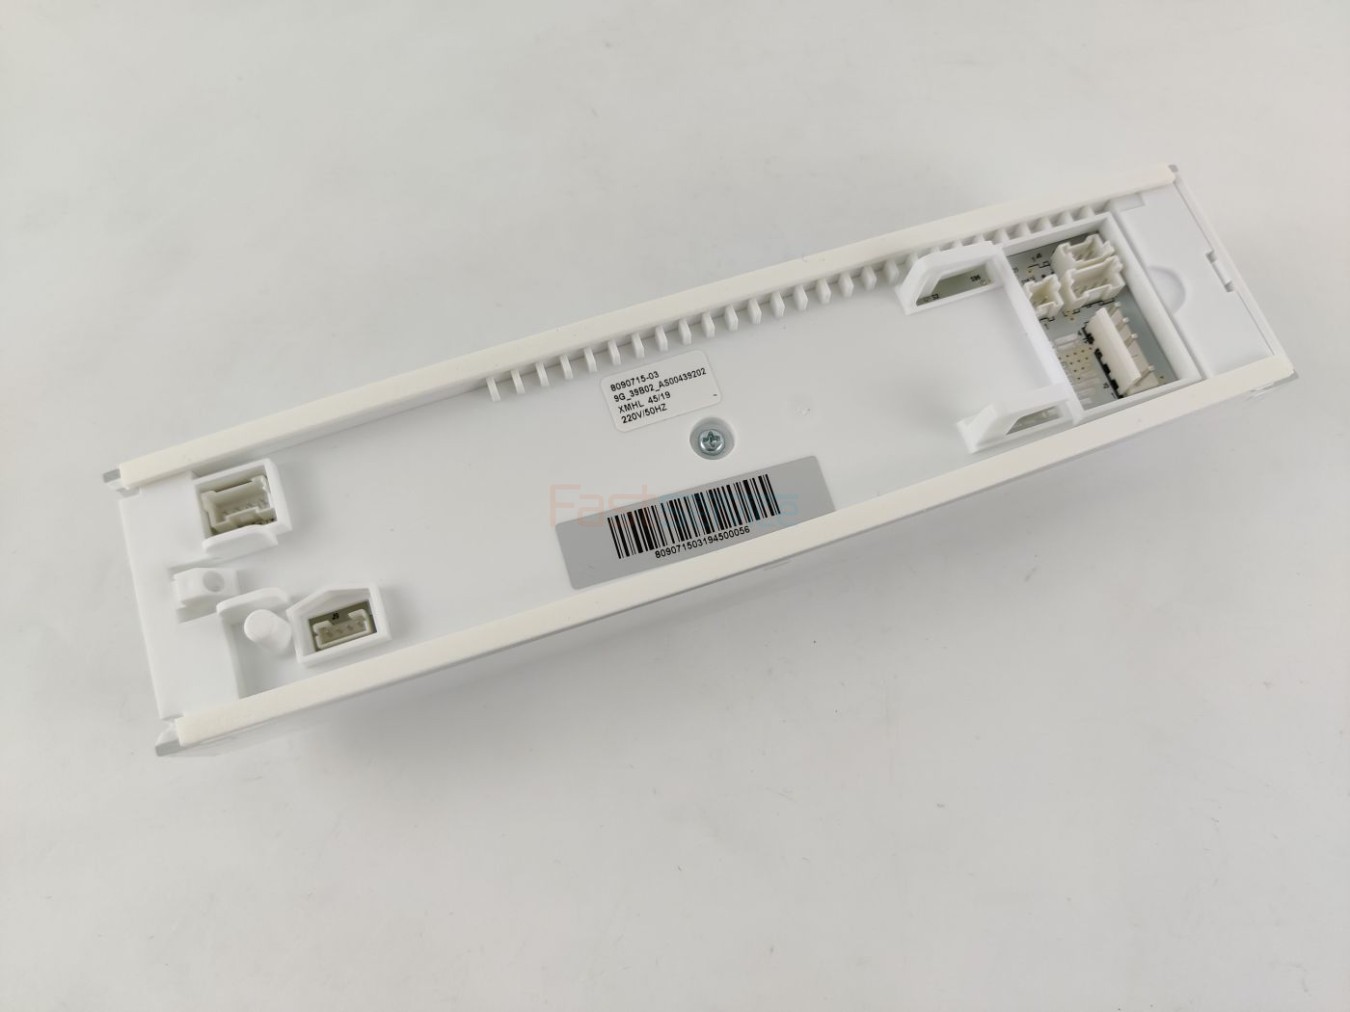 Electrolux / AEG programmed control module for refrigerator Control panels for refrigerators